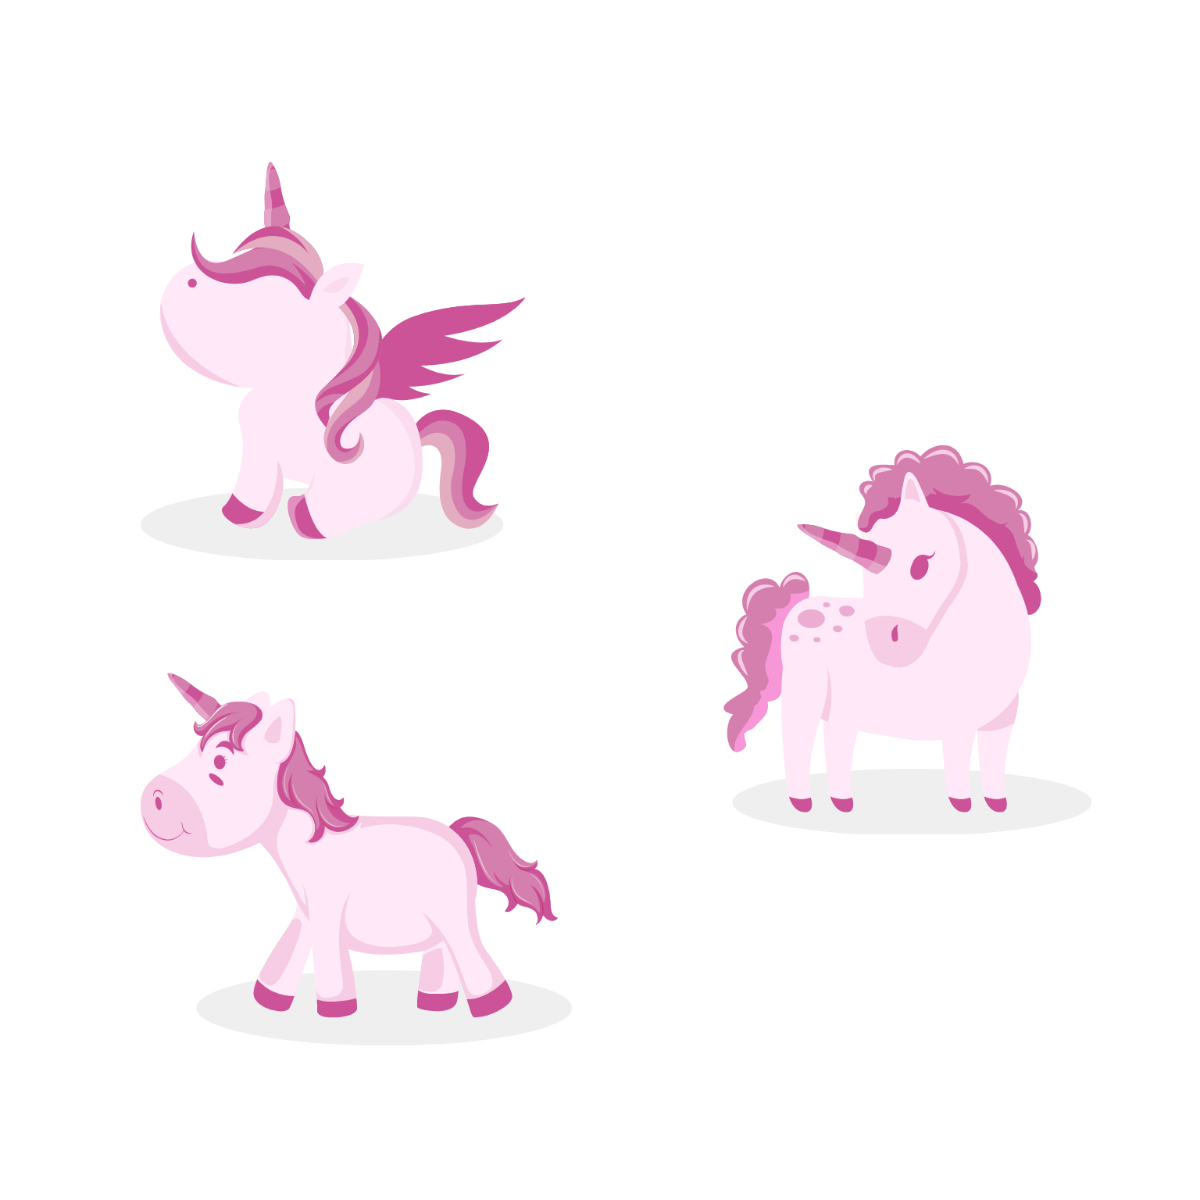 Pink Unicorn Vector